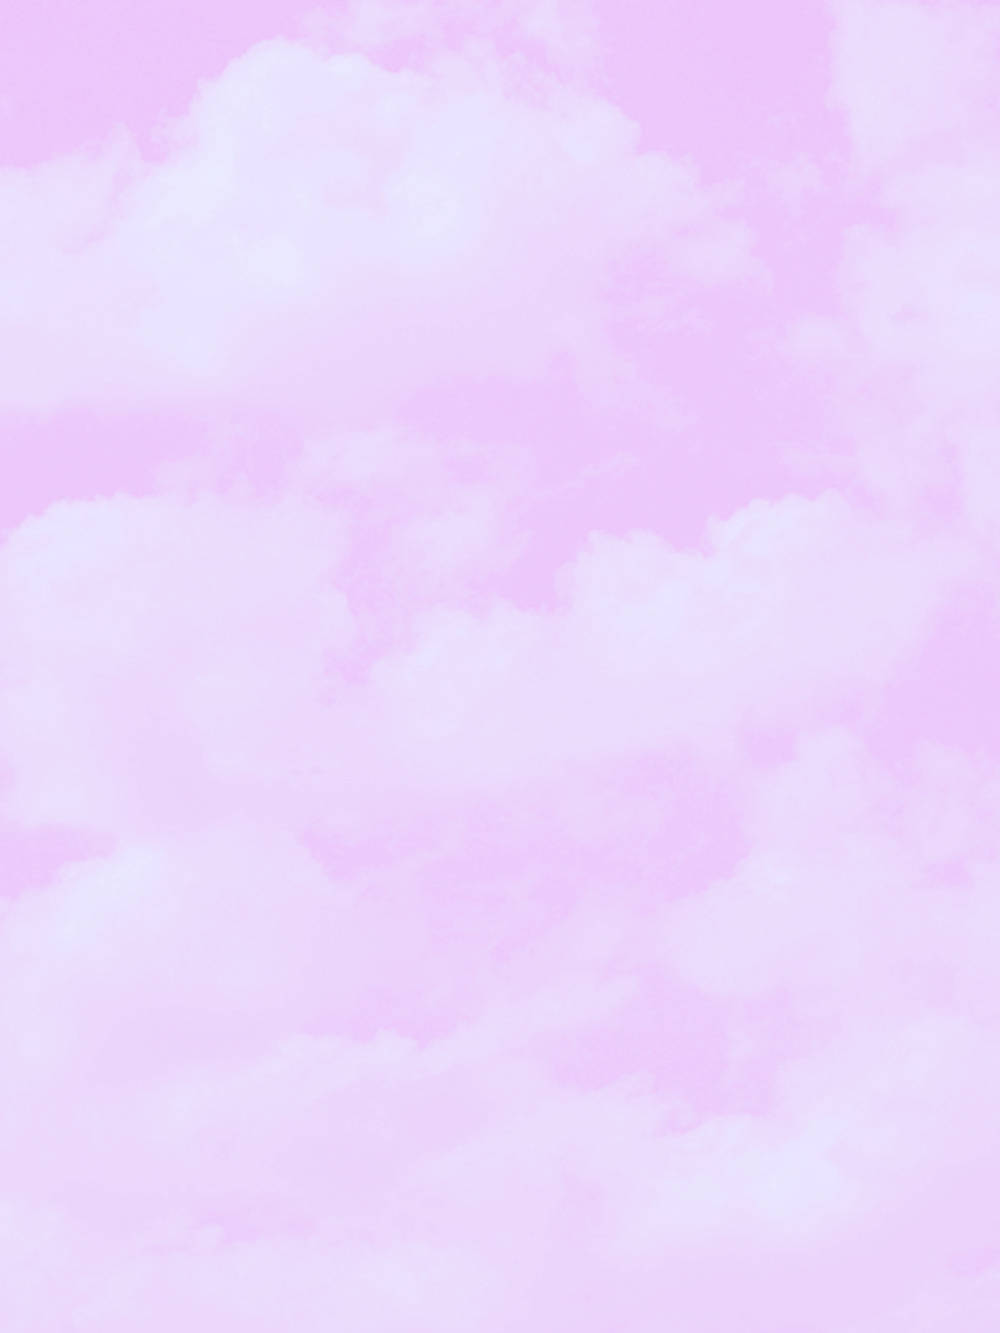 Pastel Ipad Lavender Clouds Wallpaper